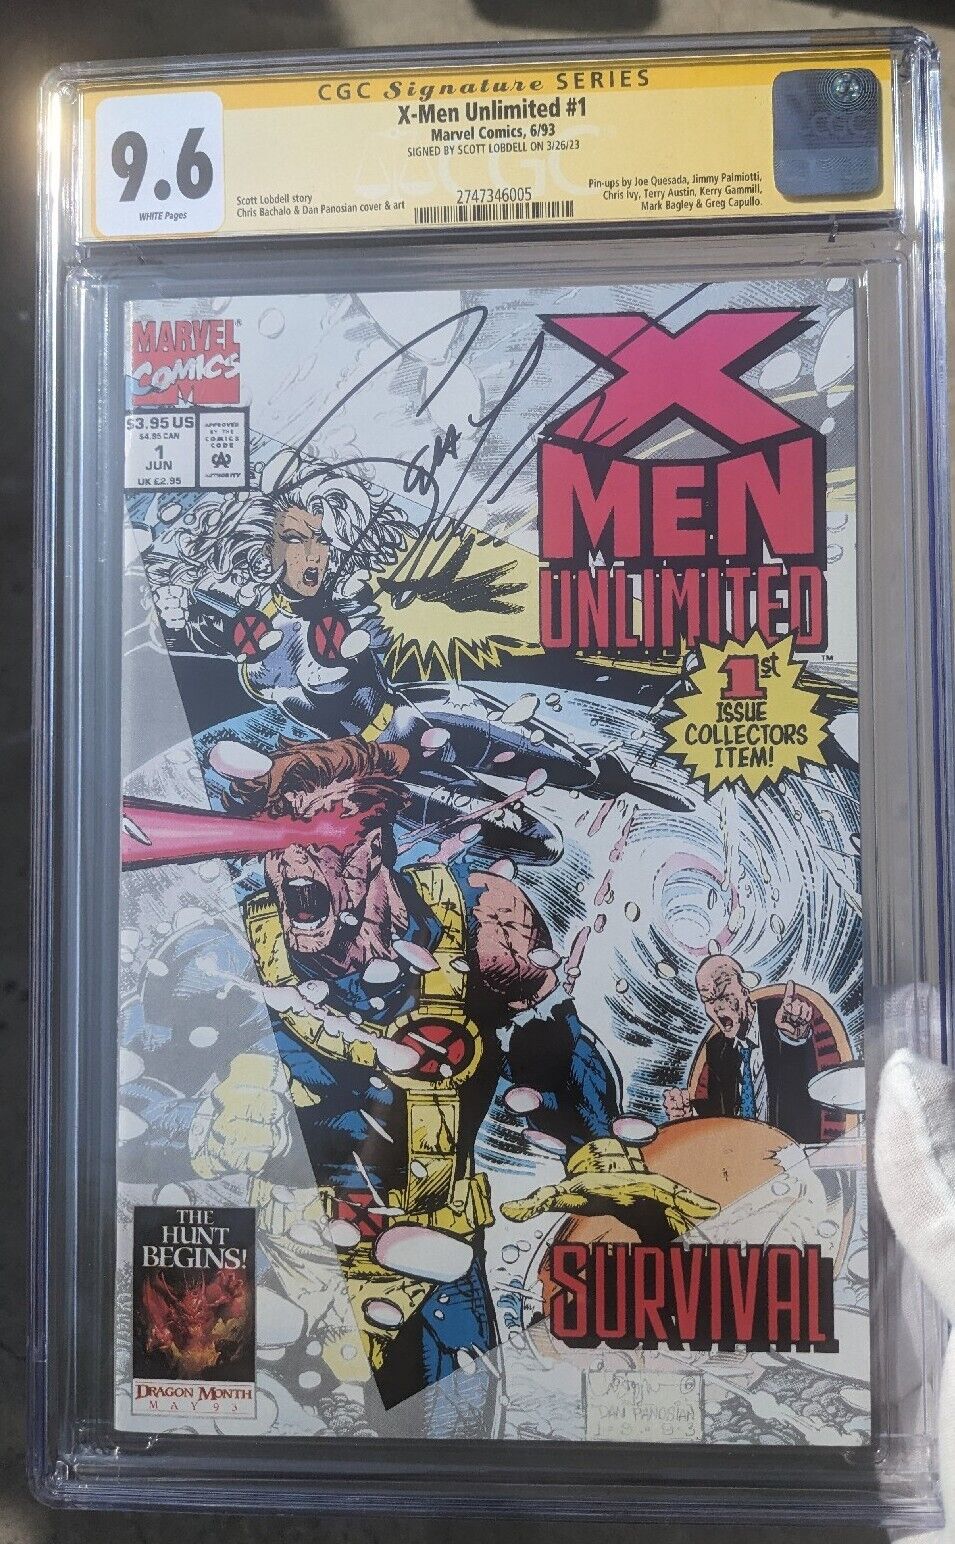 marvel comic X-Men Unlimited 1 CGC 9.6 signed by Scott Lobdell